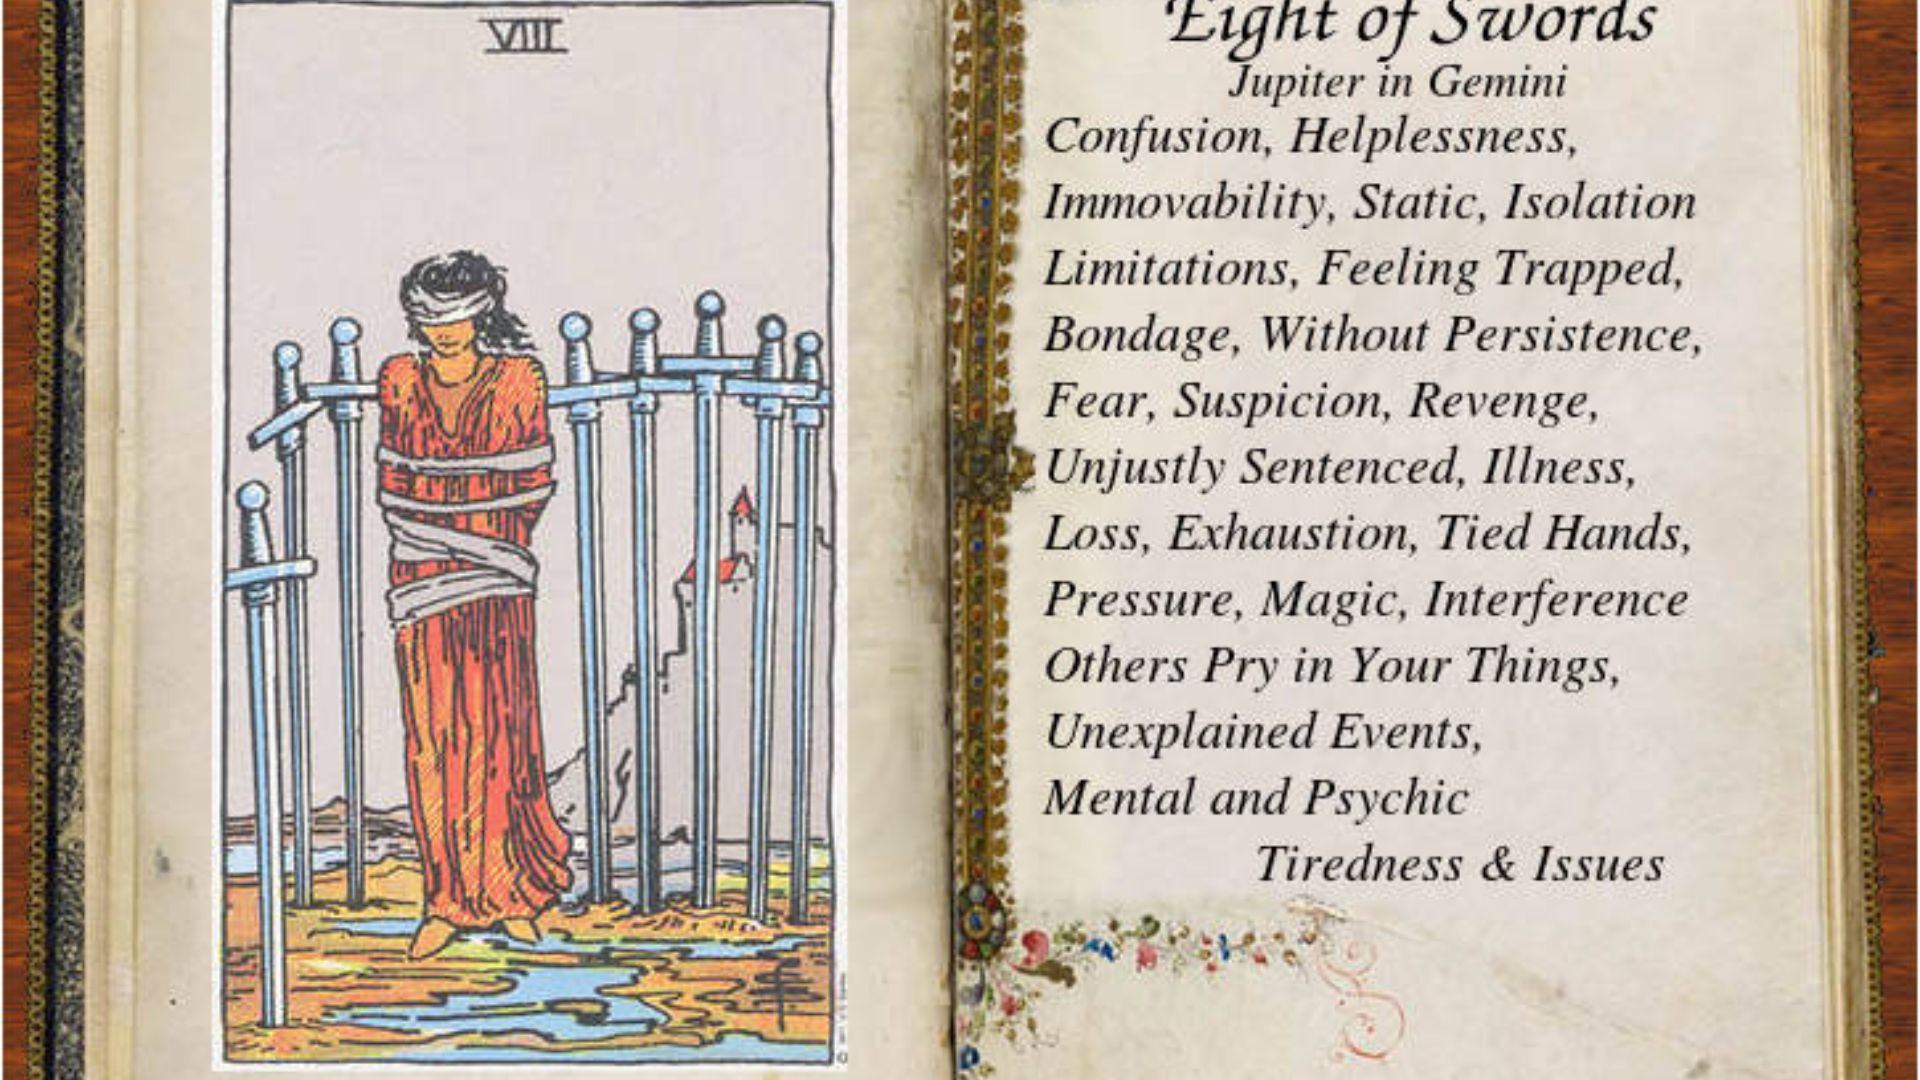 8 Of swords Tarot Card With Description